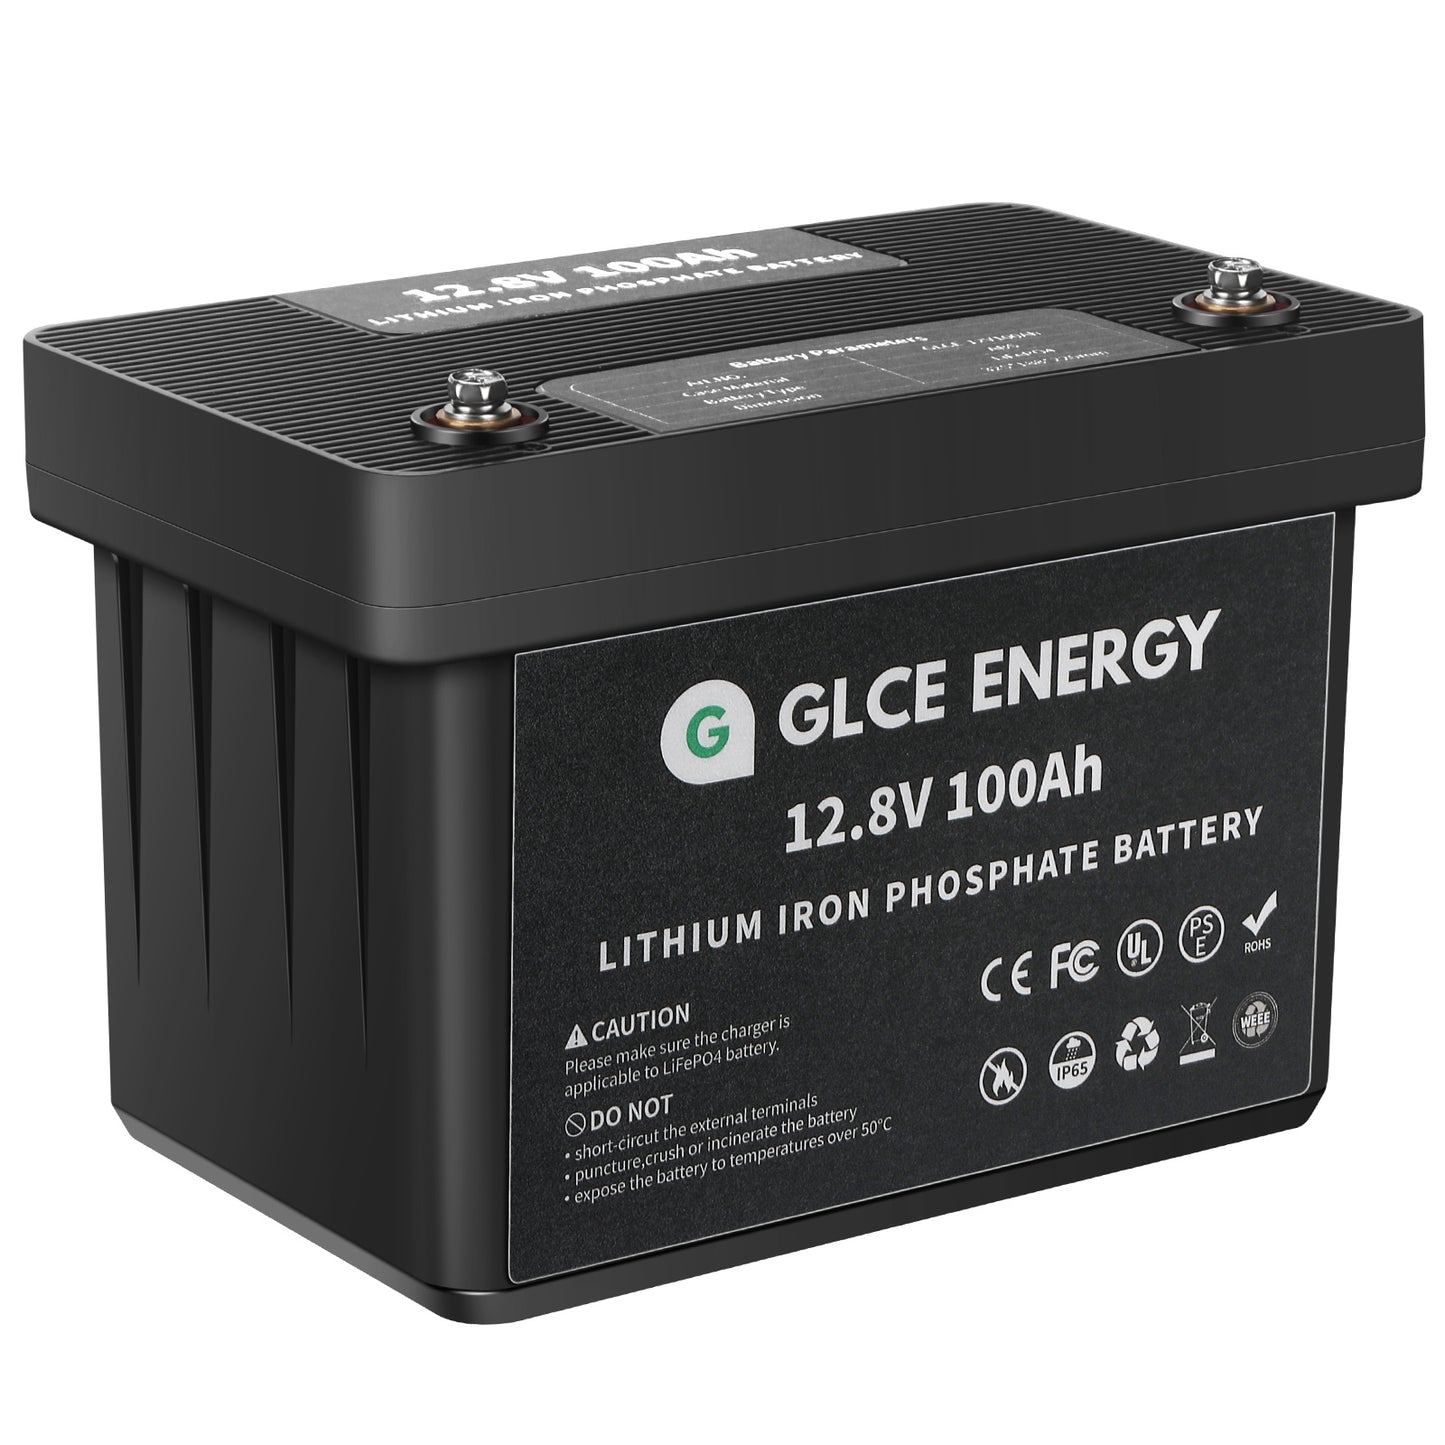 GLCE ENERGY 12.8V 100Ah Lithium Iron Phosphate Battery